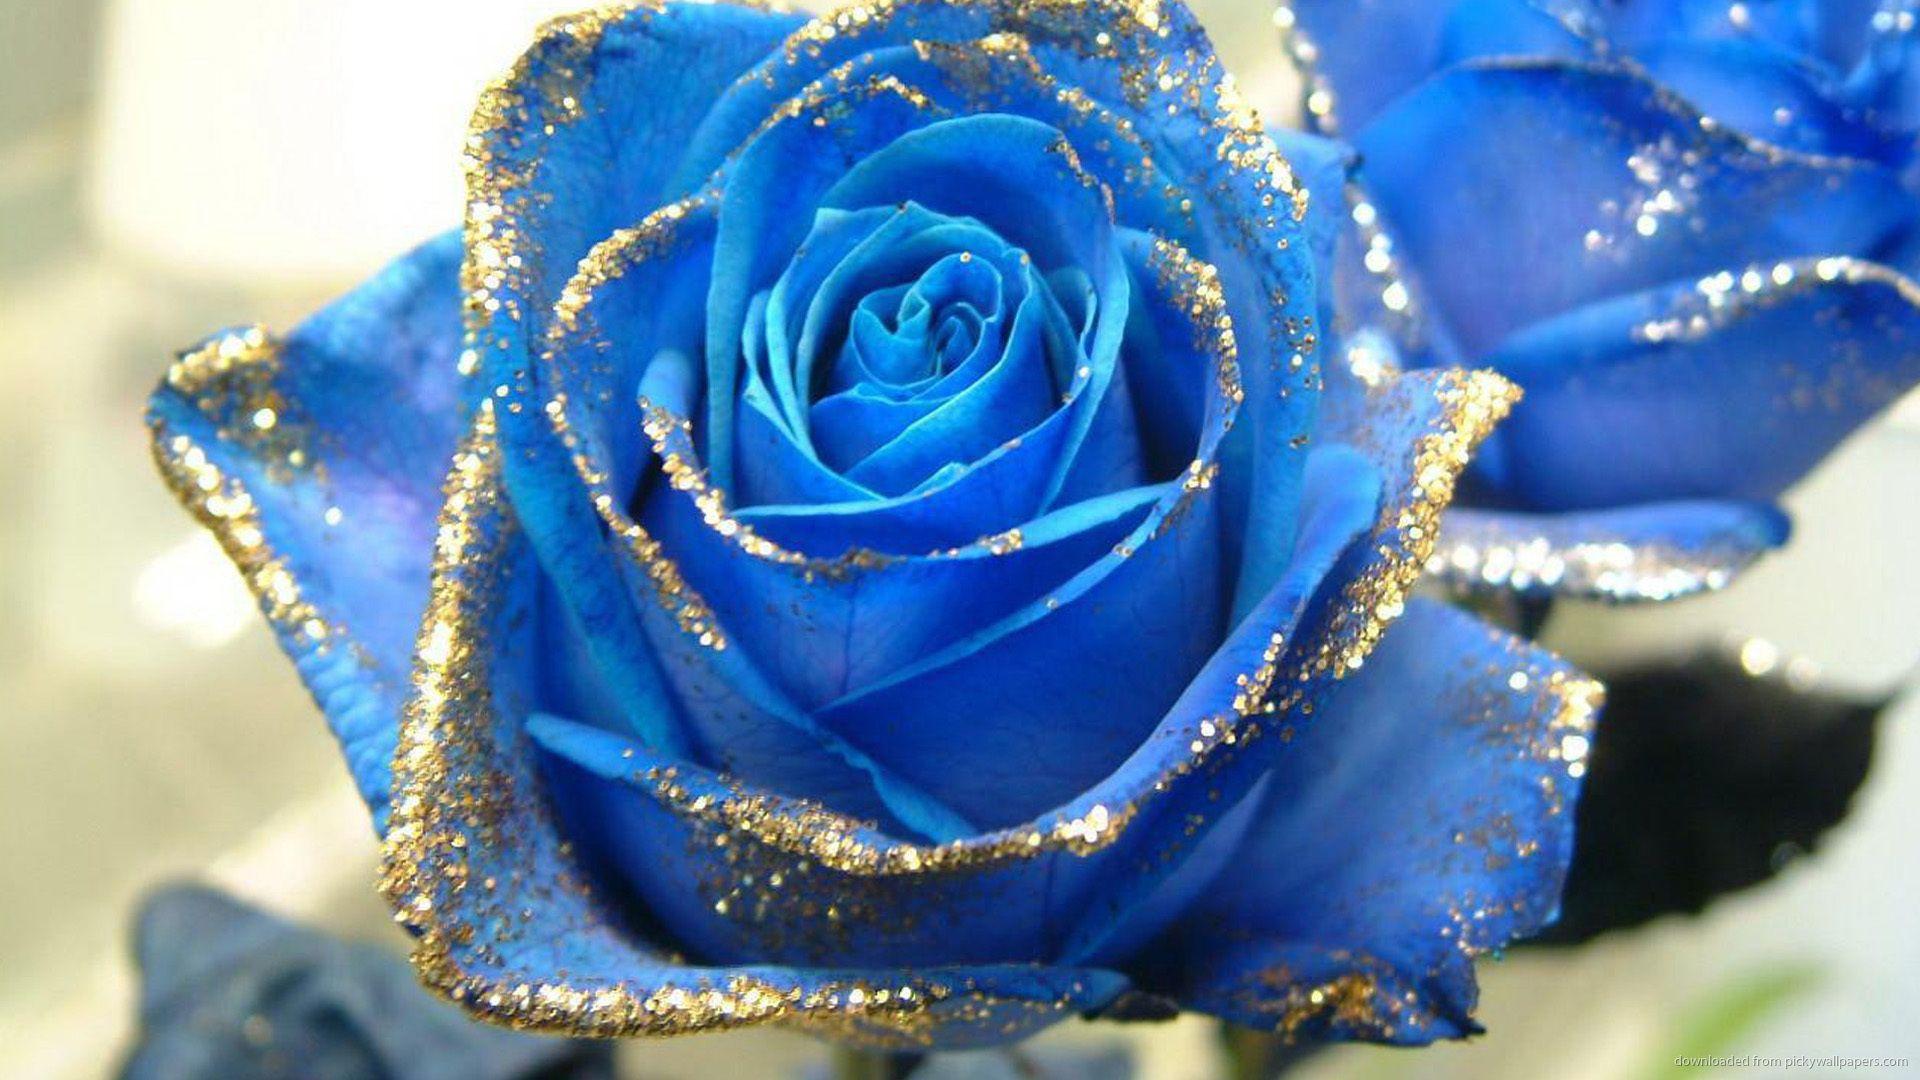 Blue Rose With Gold Glitter Wallpaper For PSP